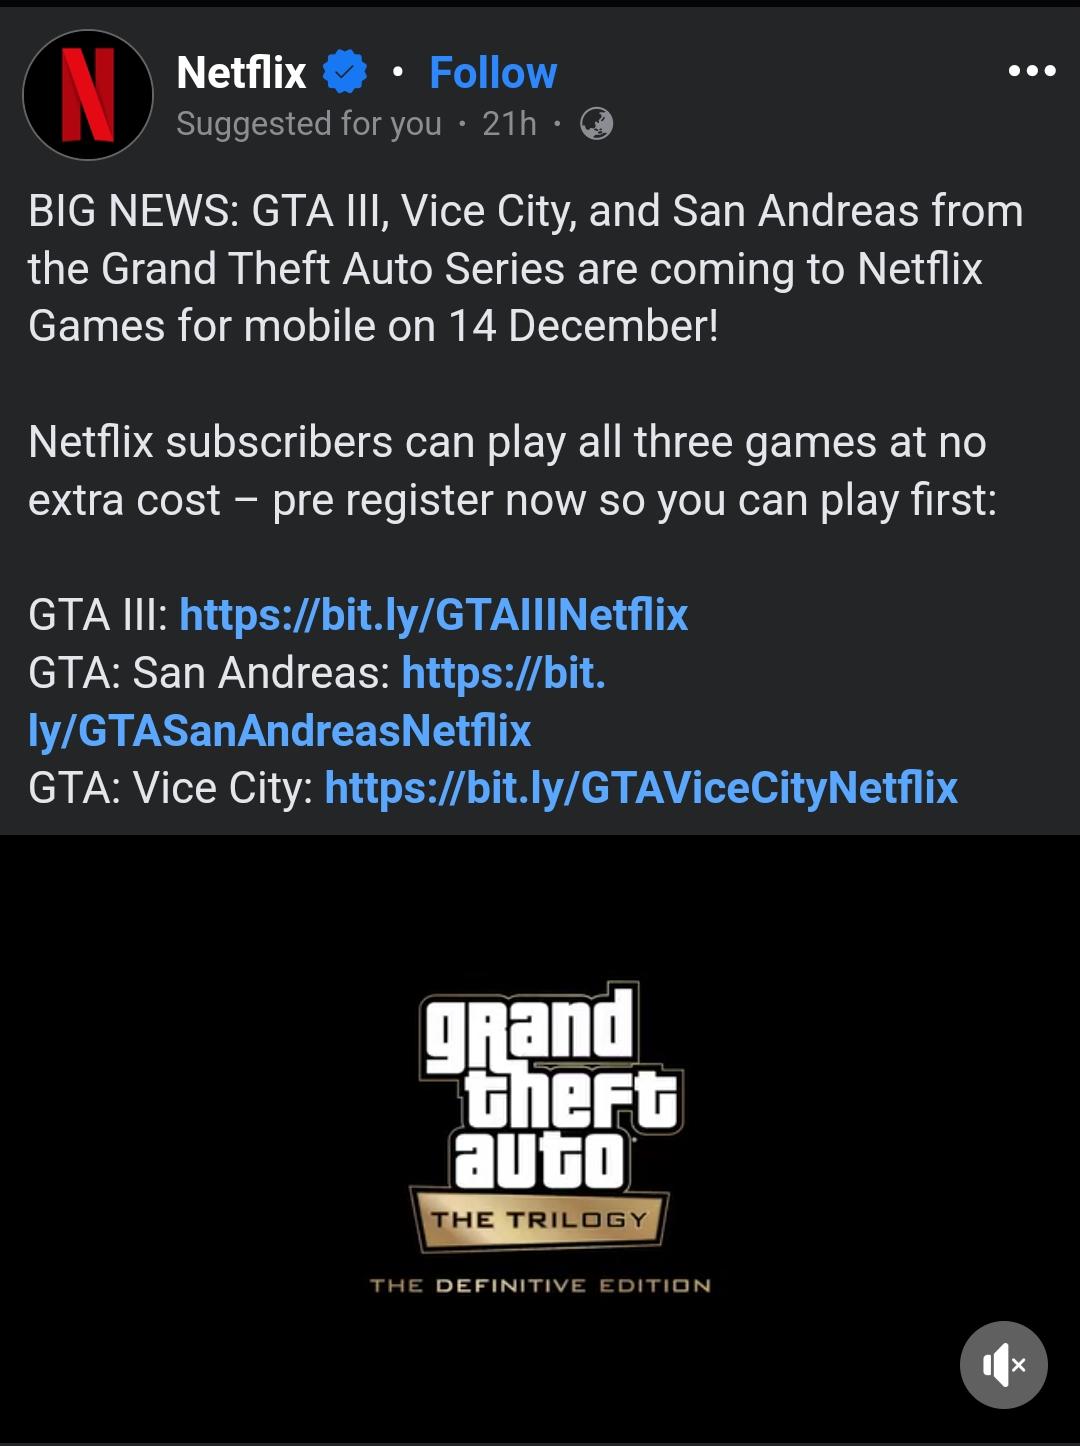 Grand Theft Auto: The Trilogy – The Definitive Edition' Arrives on Netflix  December 14 - About Netflix